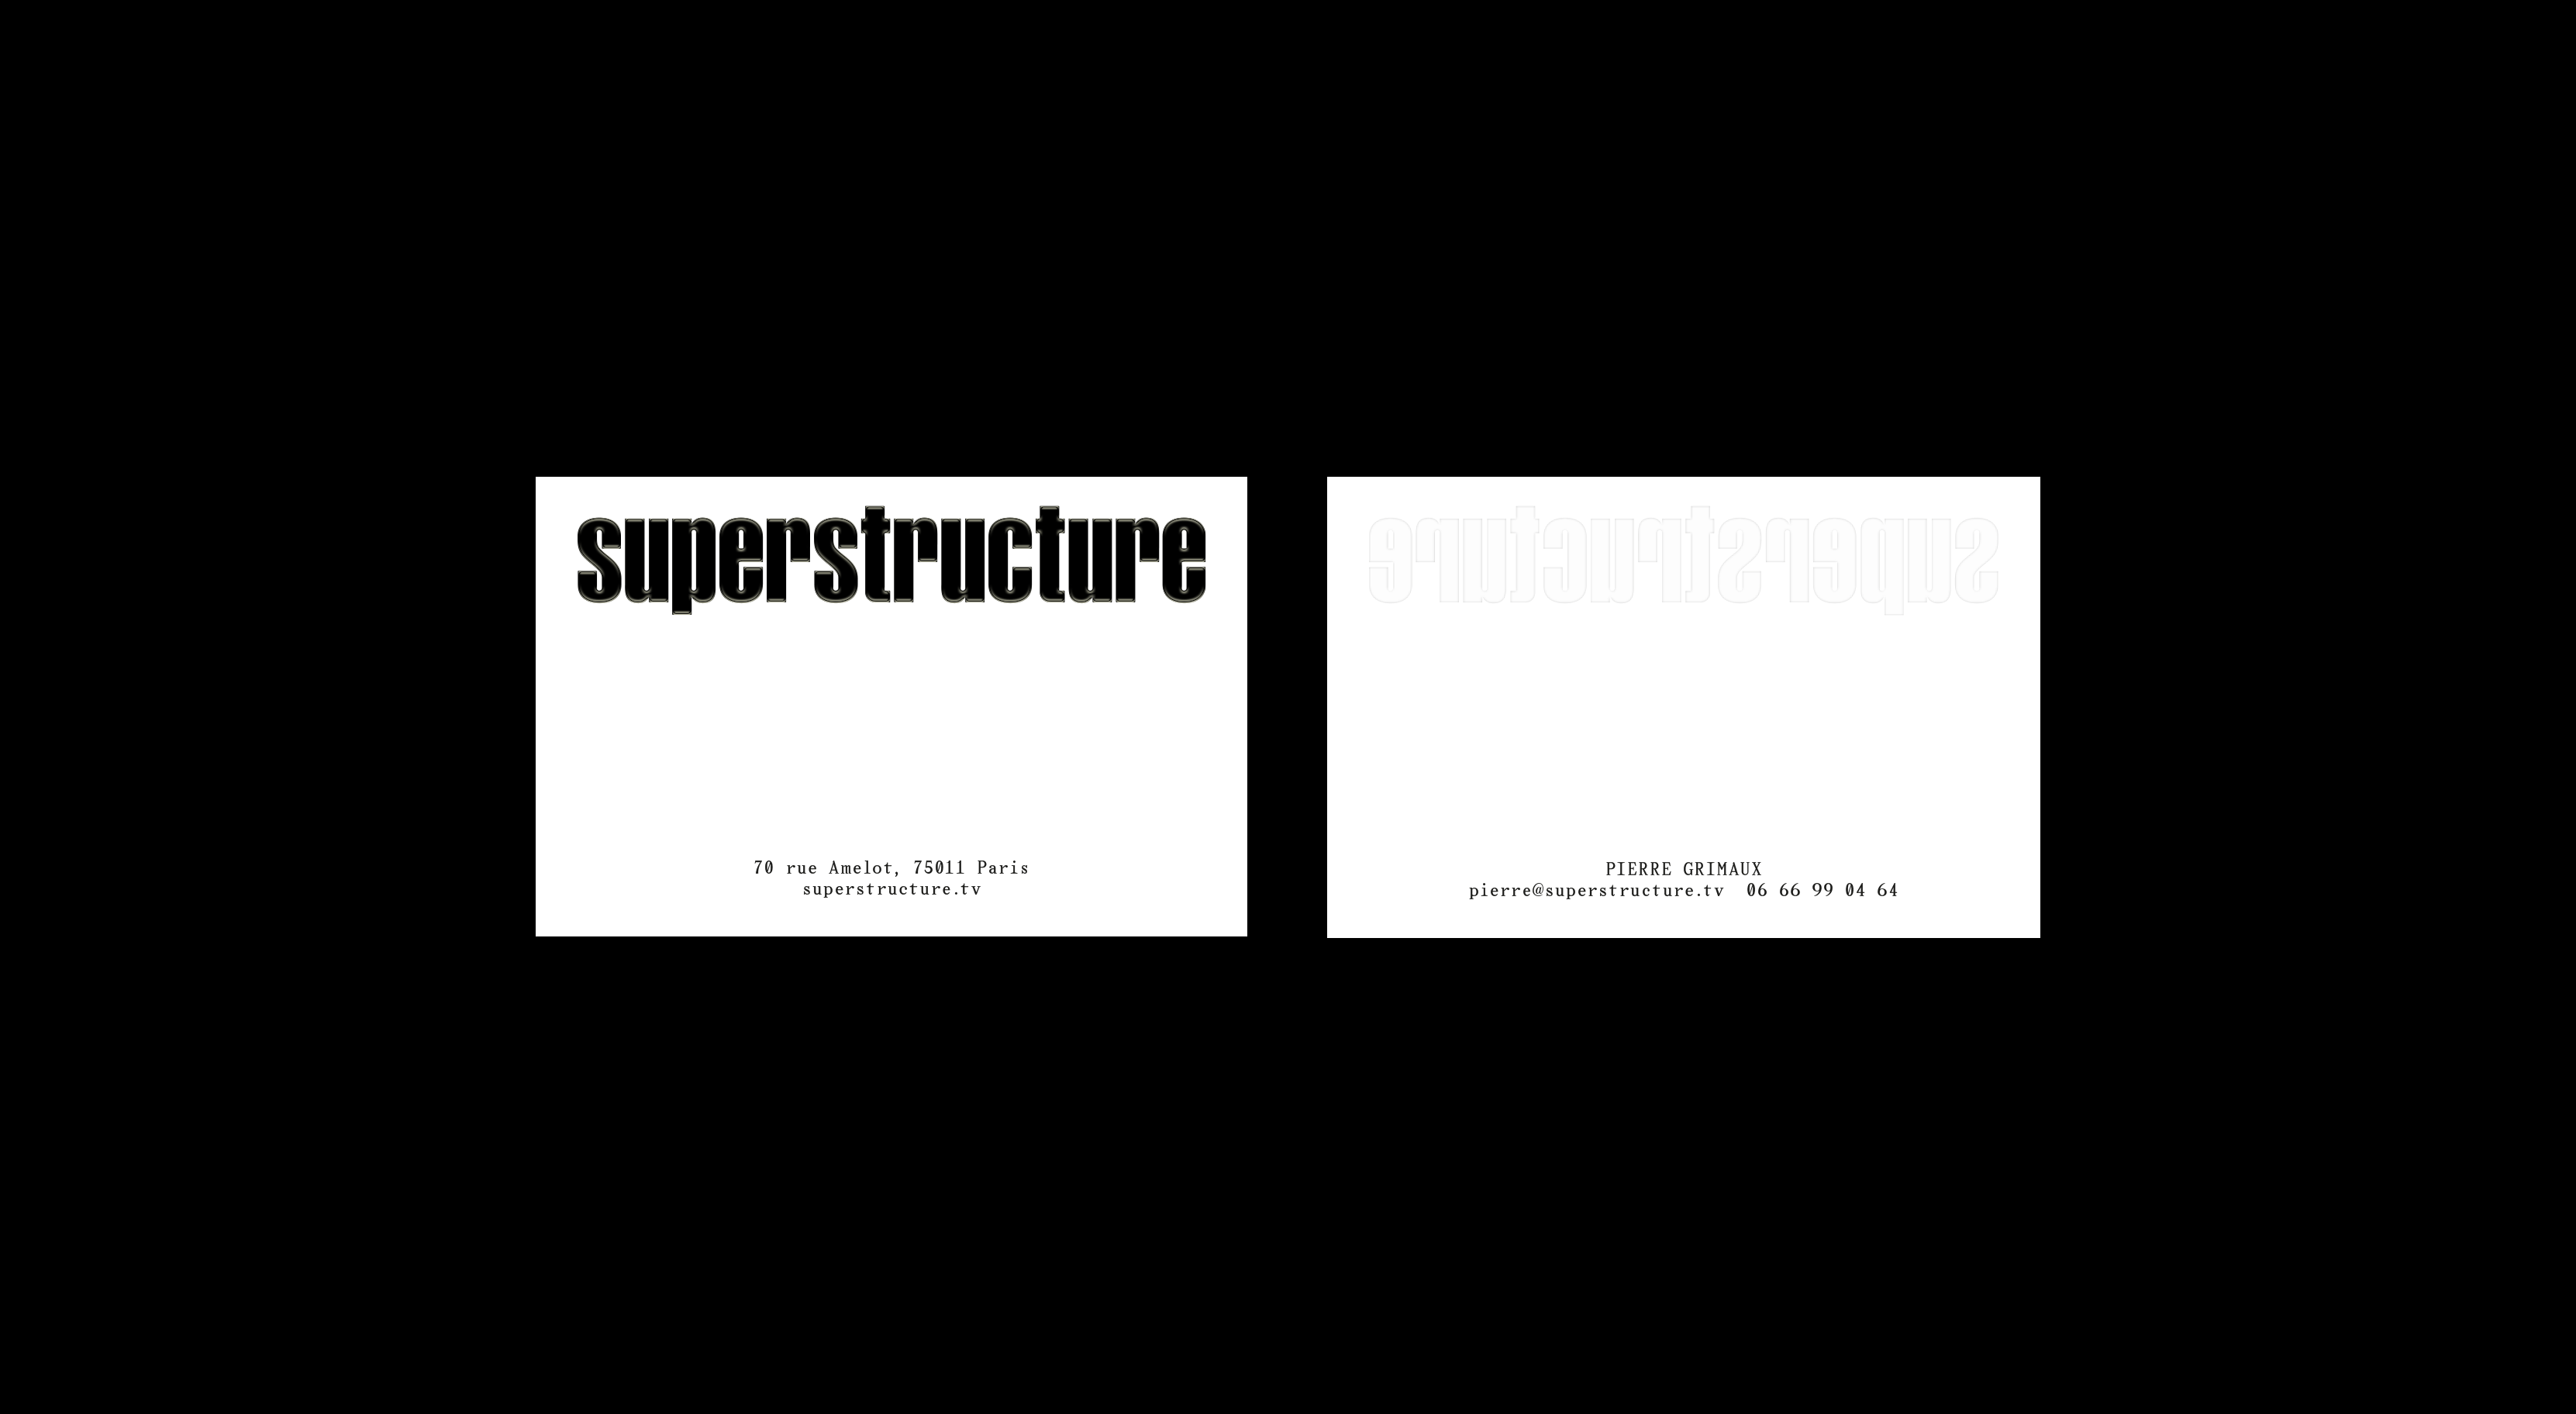 Studio Mitsu for superstructure production company, art direction, visual identity, logotype, design, graphic design, card